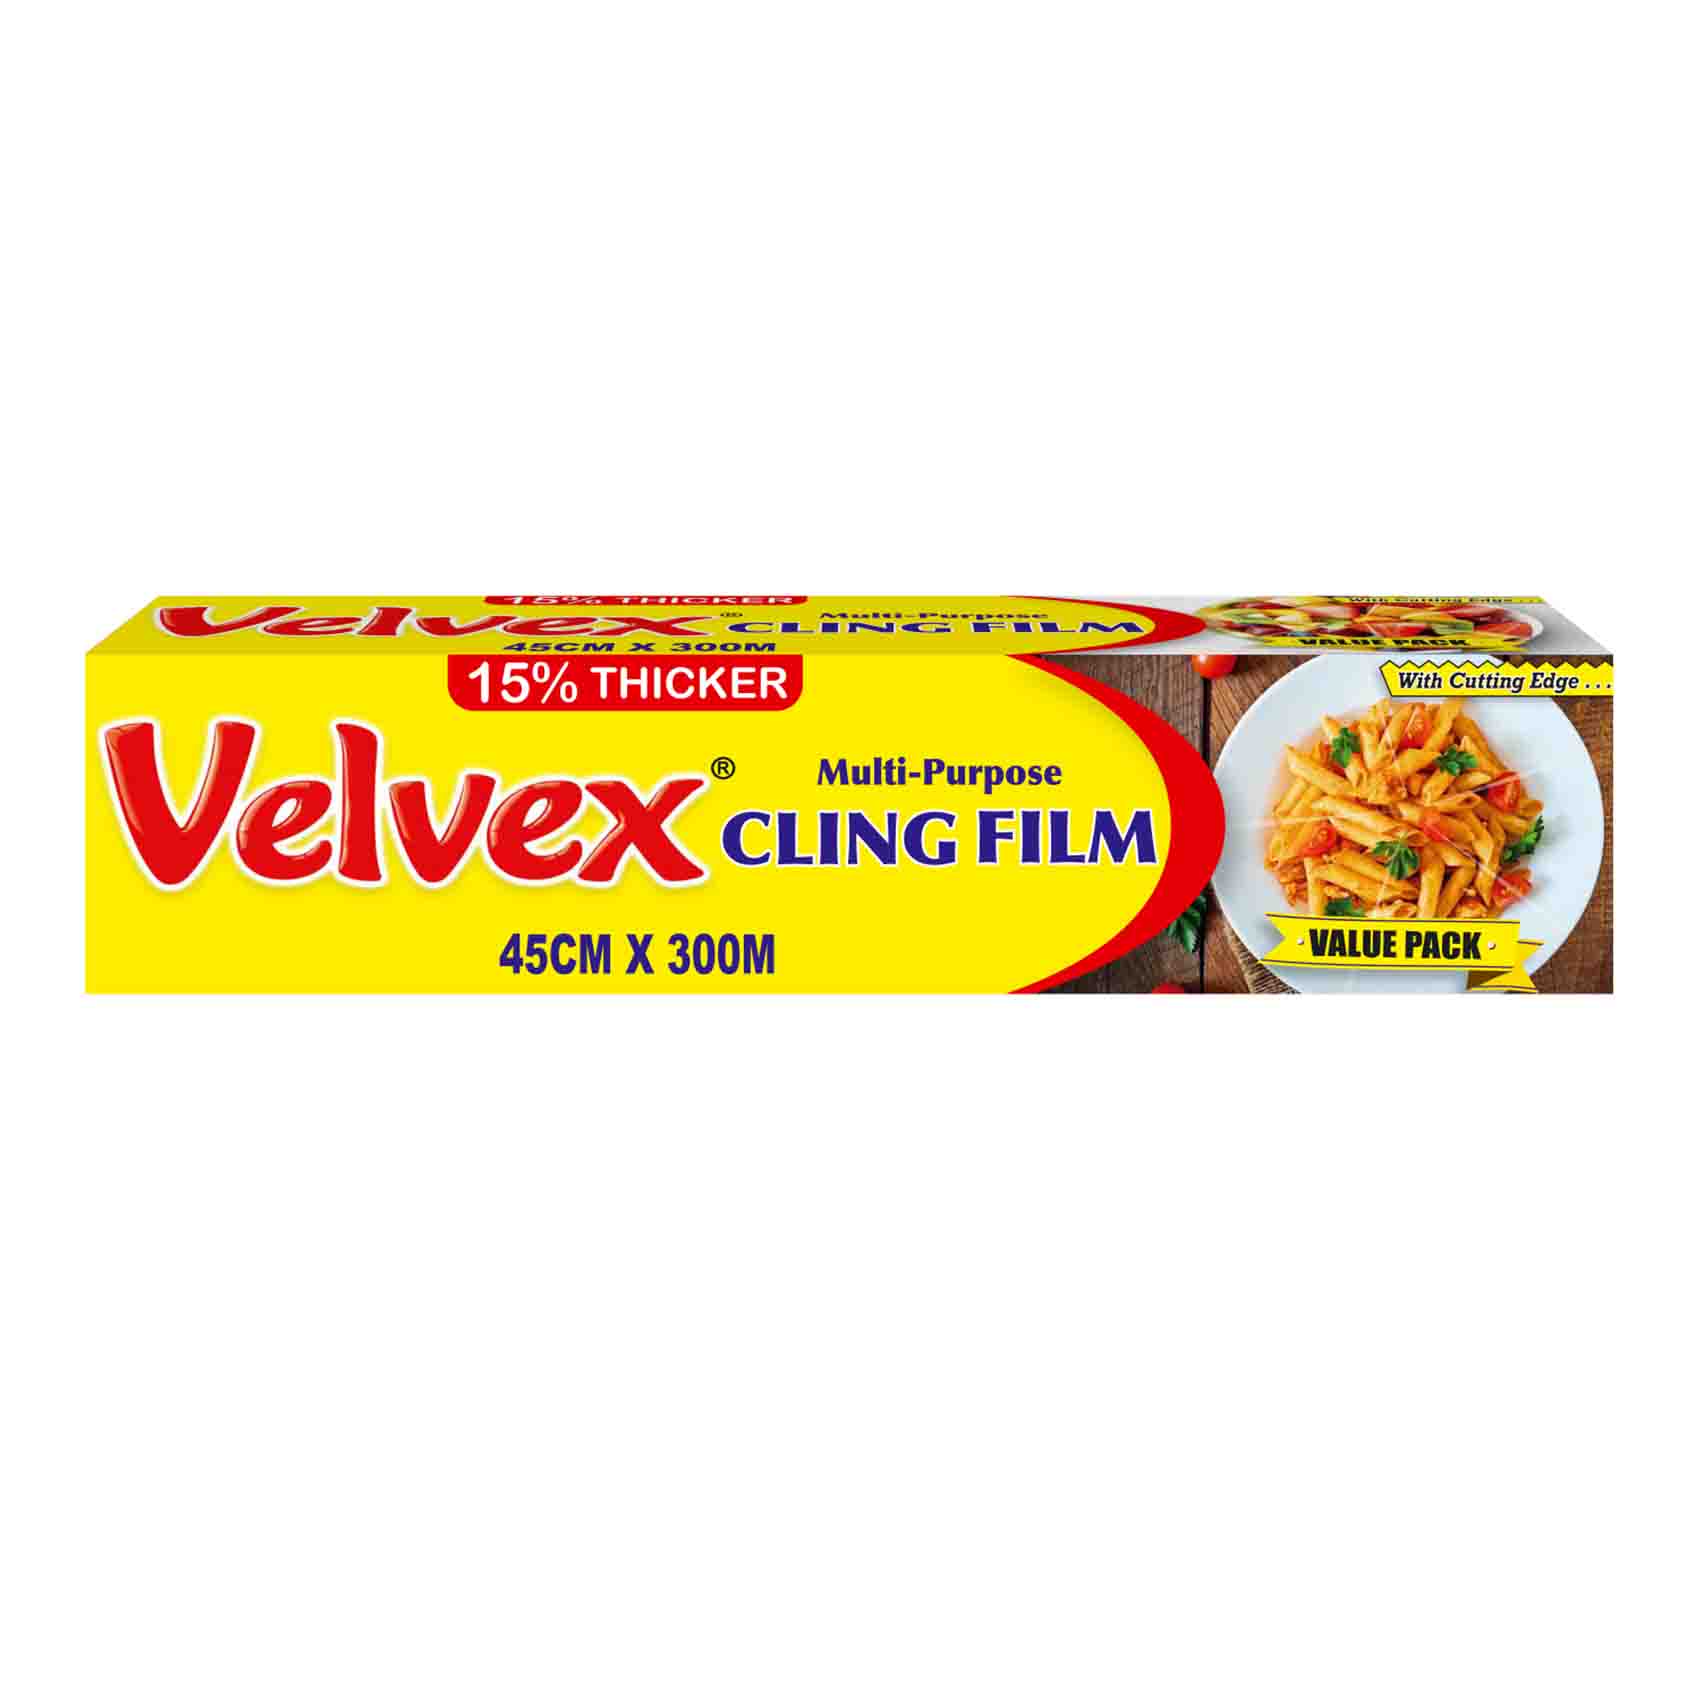 Velvex Cling Film 45Cm X 300M